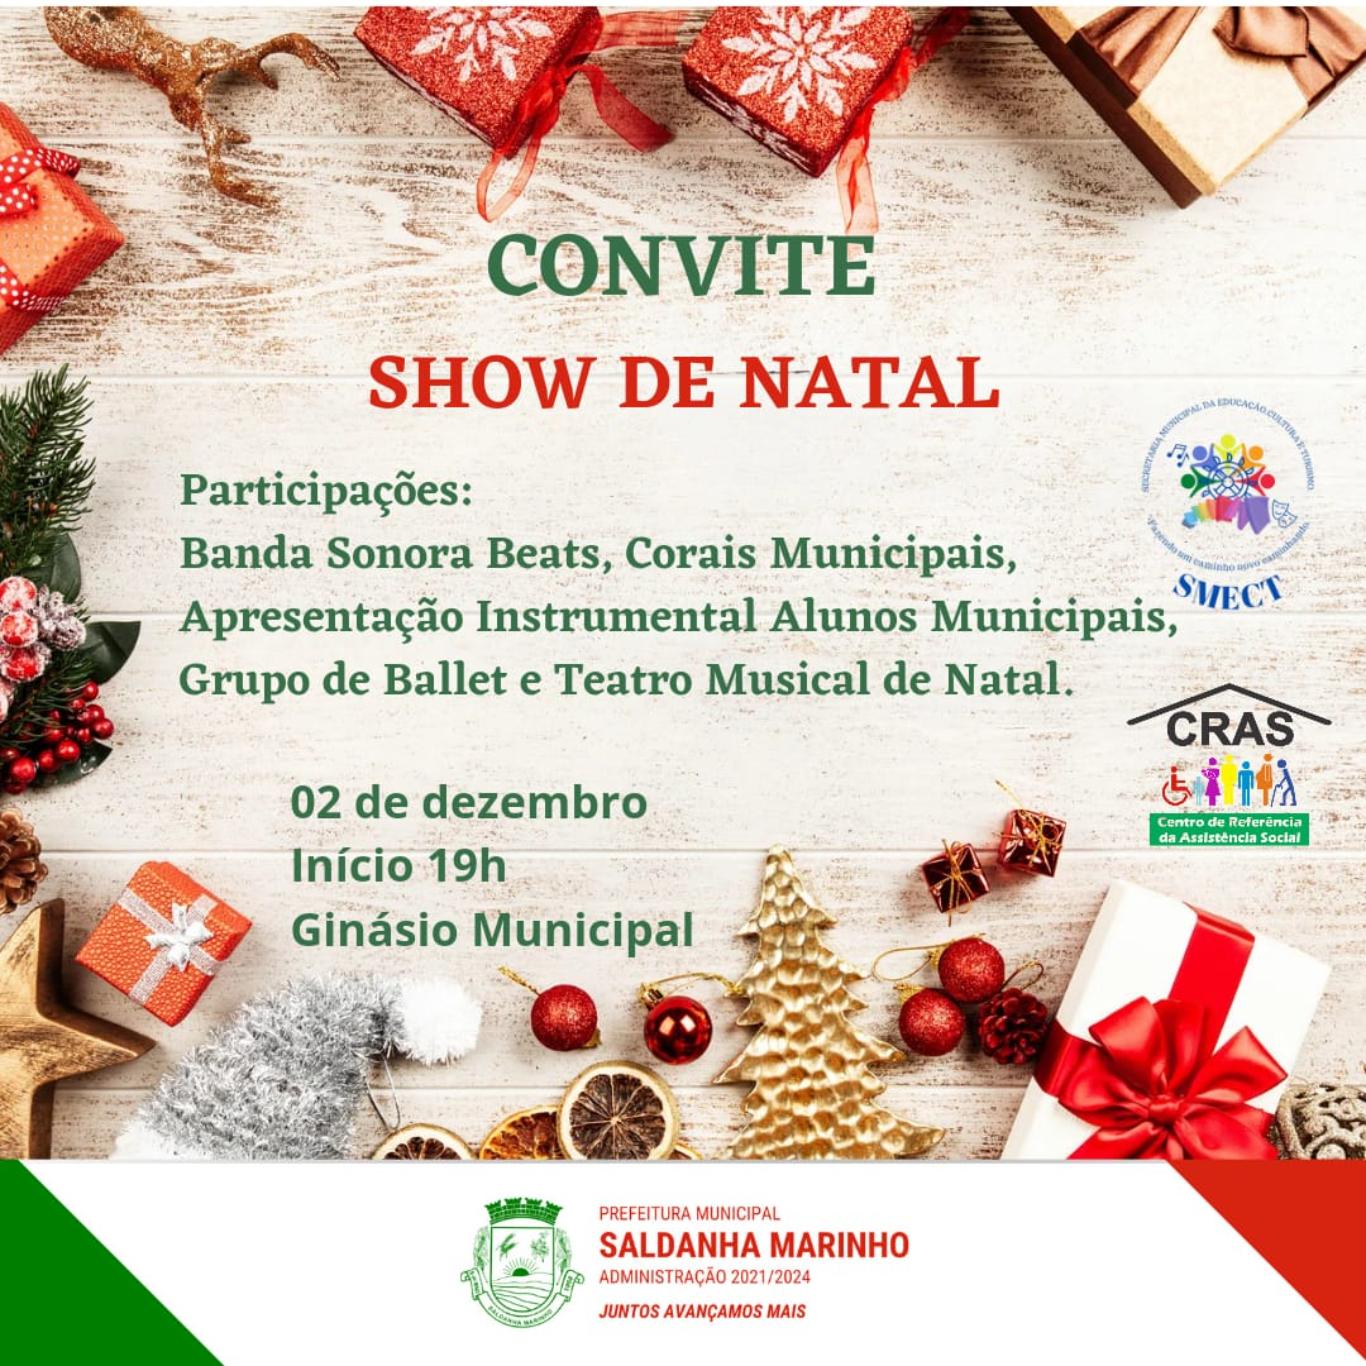 CONVITE SHOW DE NATAL